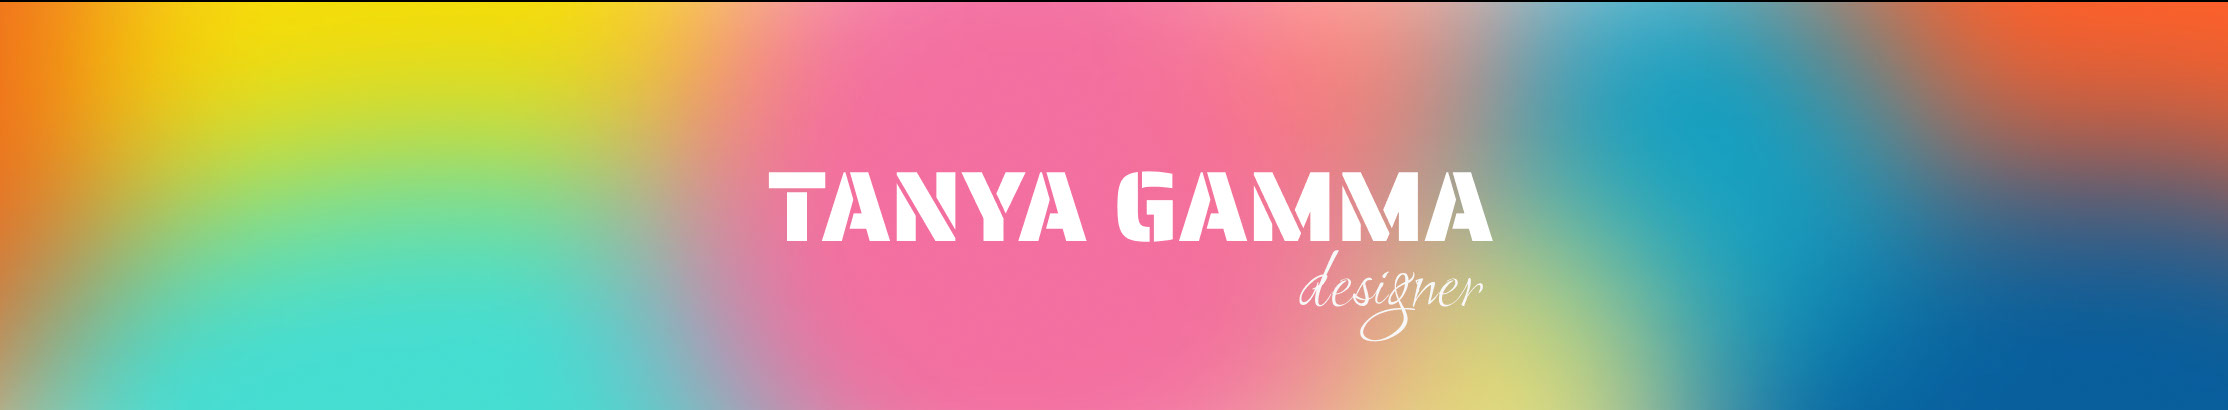 Tatyana Gamma's profile banner